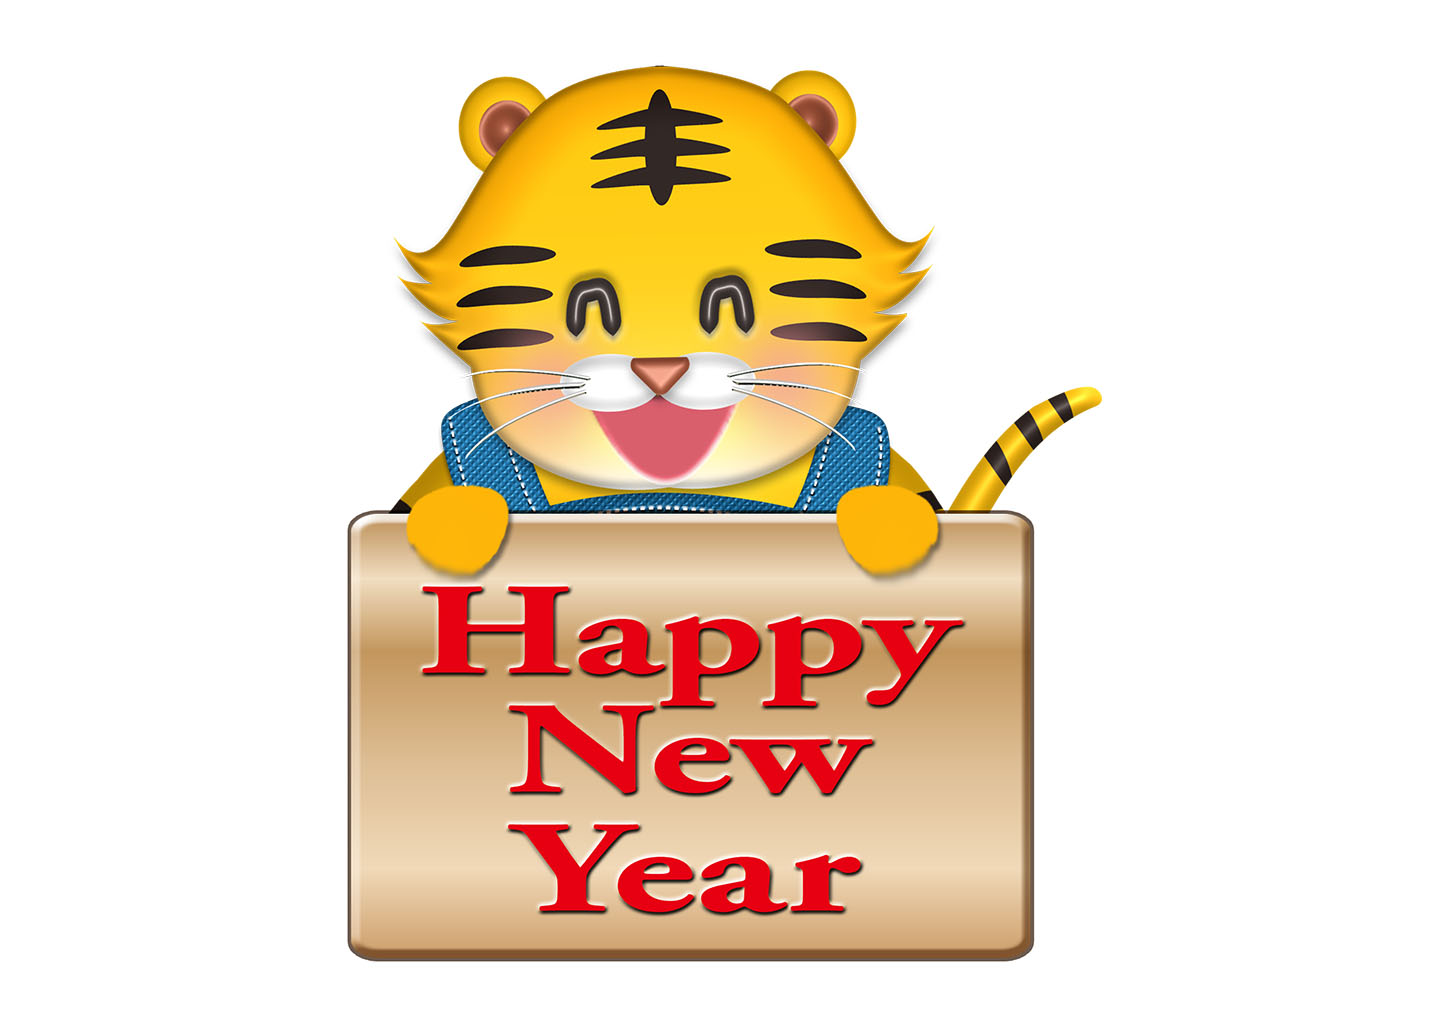 Happy New Yearボードを持つ虎のイラスト